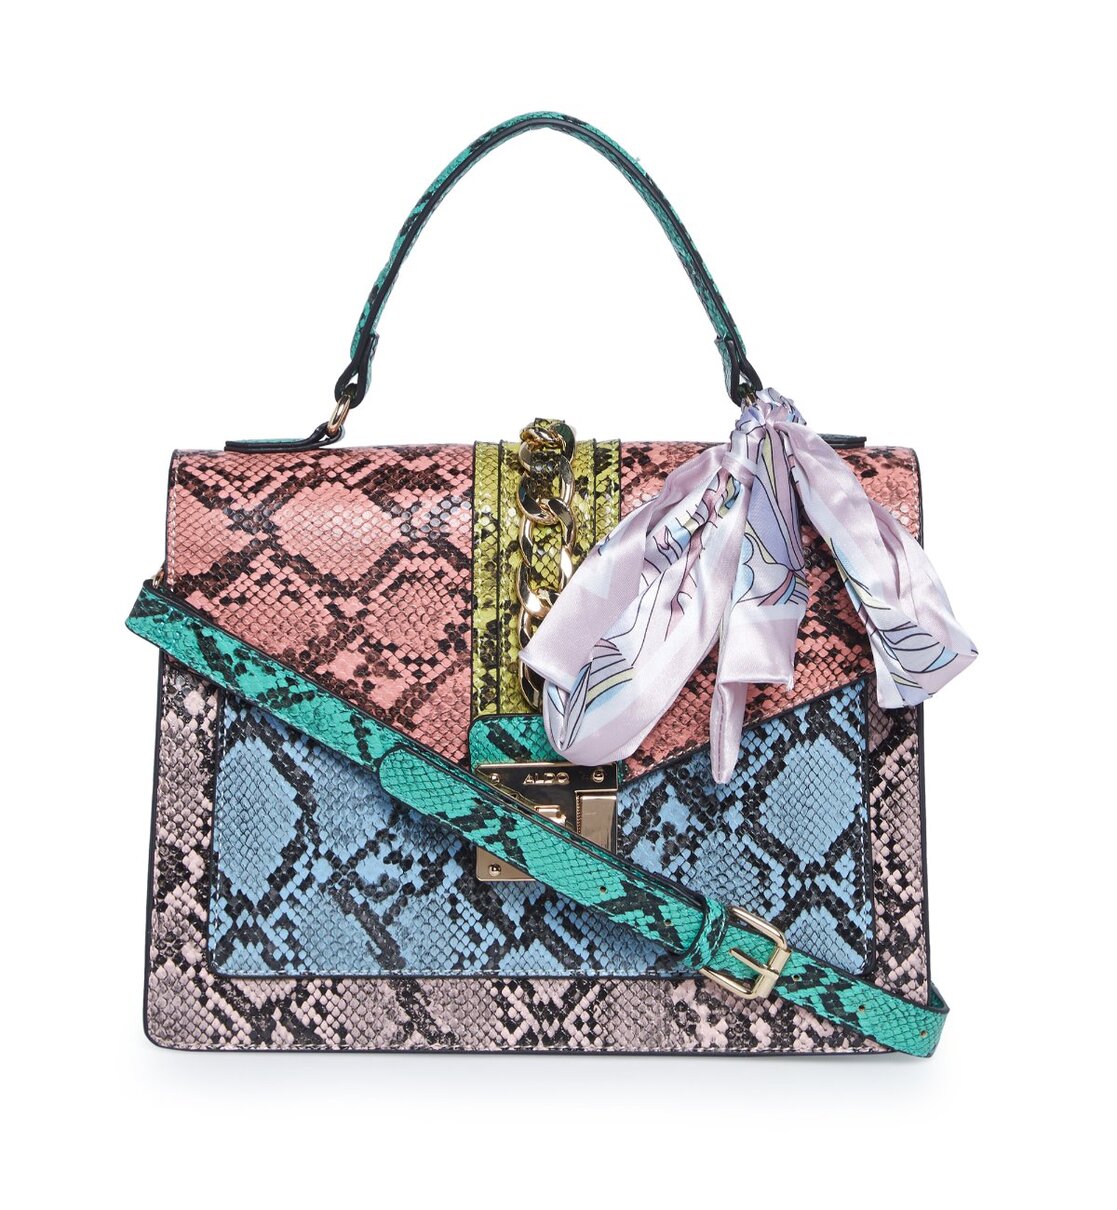 Som svar på udvikle kim Buy Multicoloured Handbags for Women by ALDO Online | Ajio.com